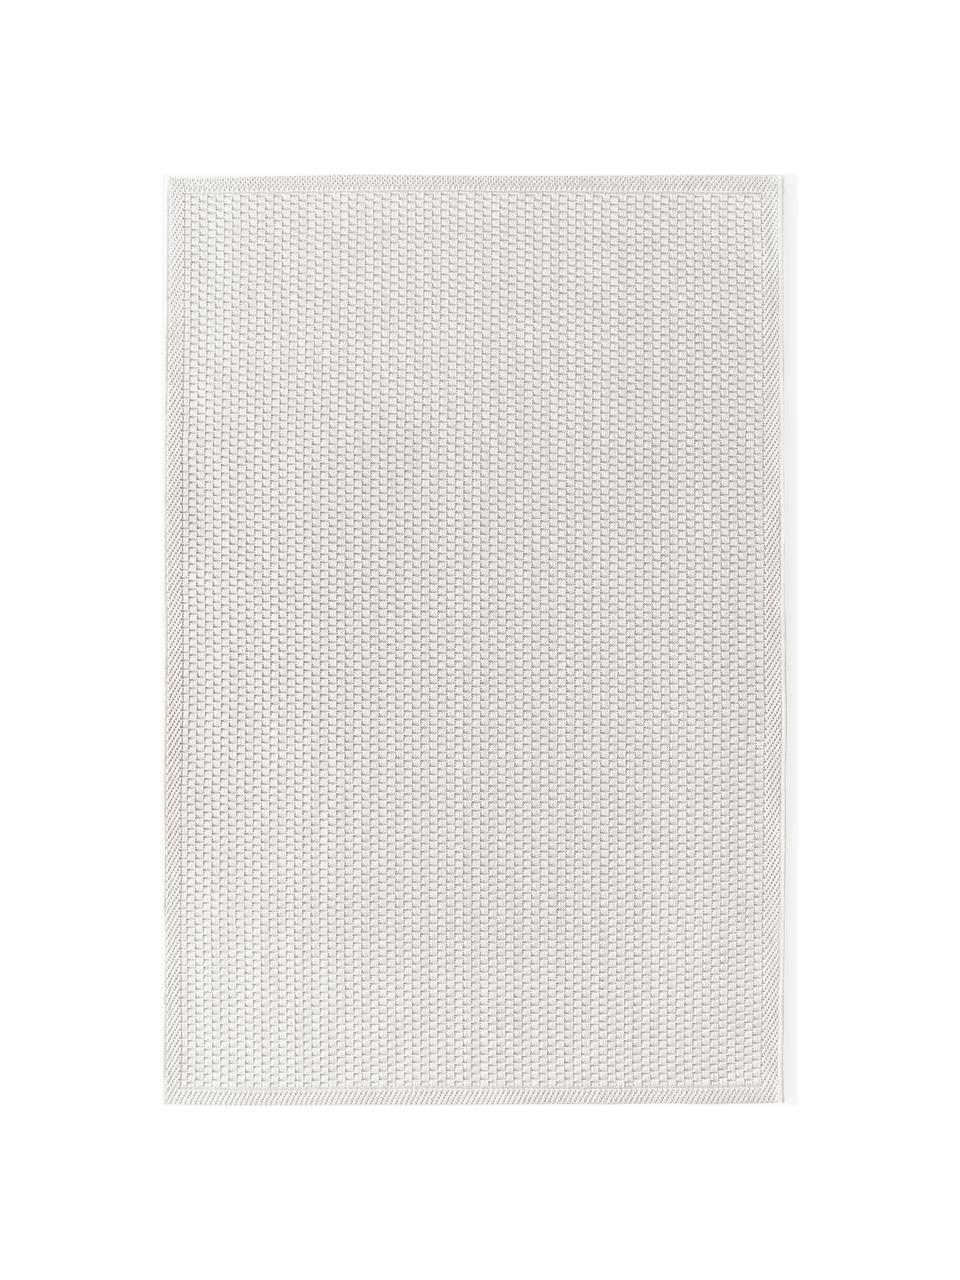 Tappeto da interno-esterno Toronto, 100% polipropilene, Bianco crema, Larg. 200 x Lung. 300 cm (taglia L)